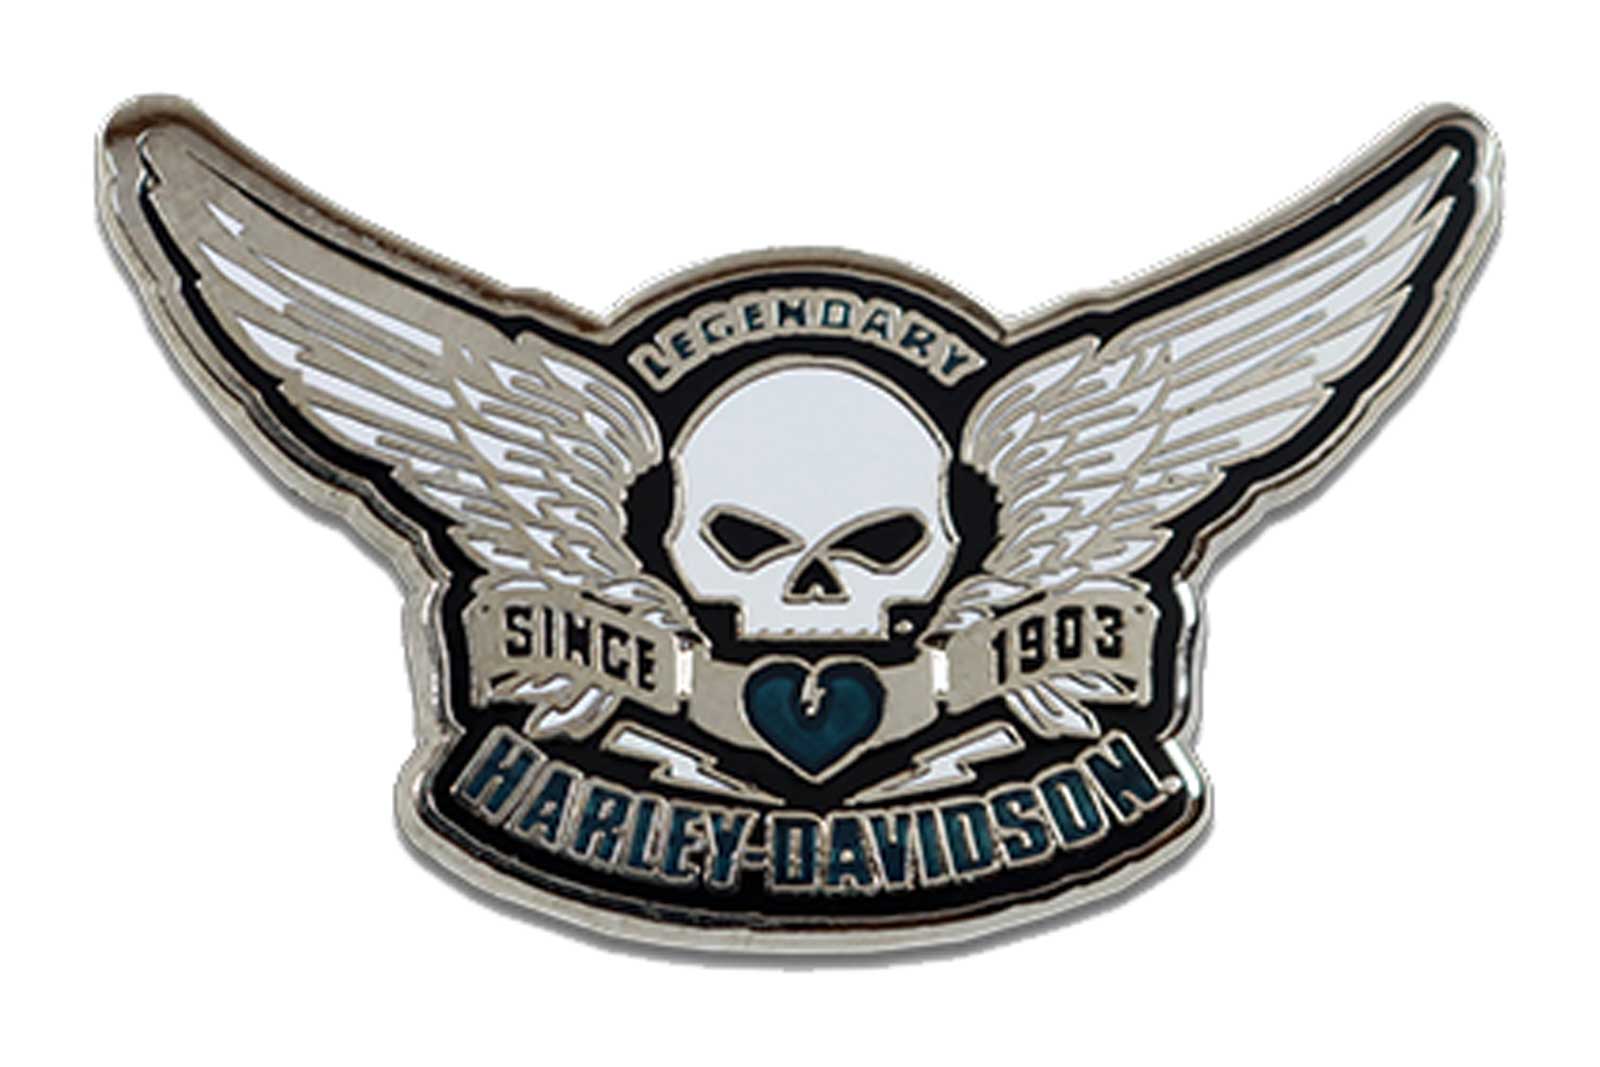 harley davidson skull wing logo